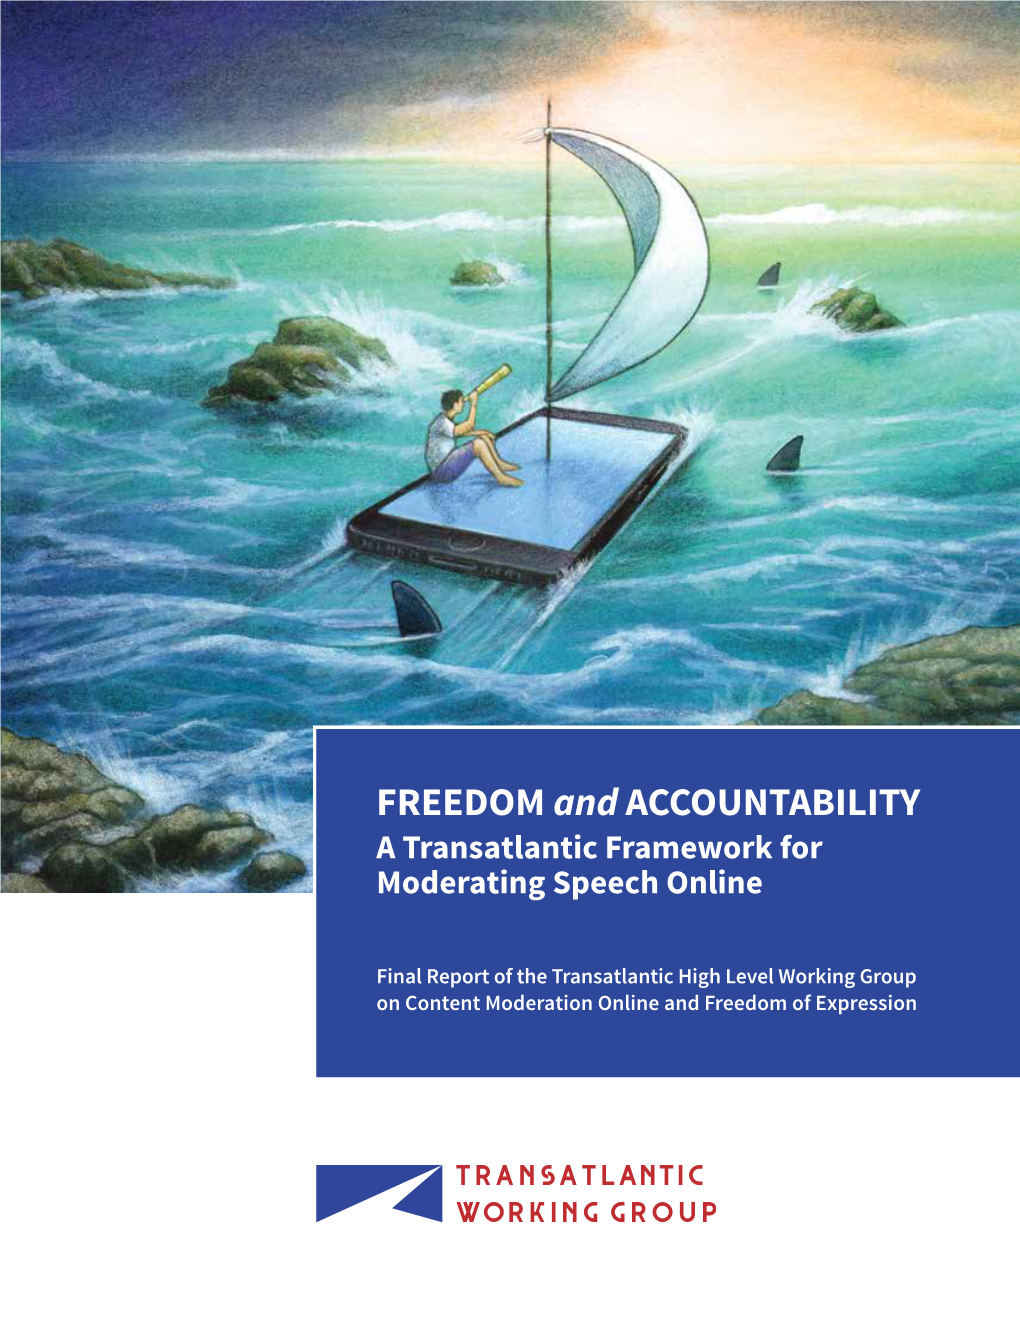 FREEDOM and ACCOUNTABILITY a Transatlantic Framework for Moderating Speech Online